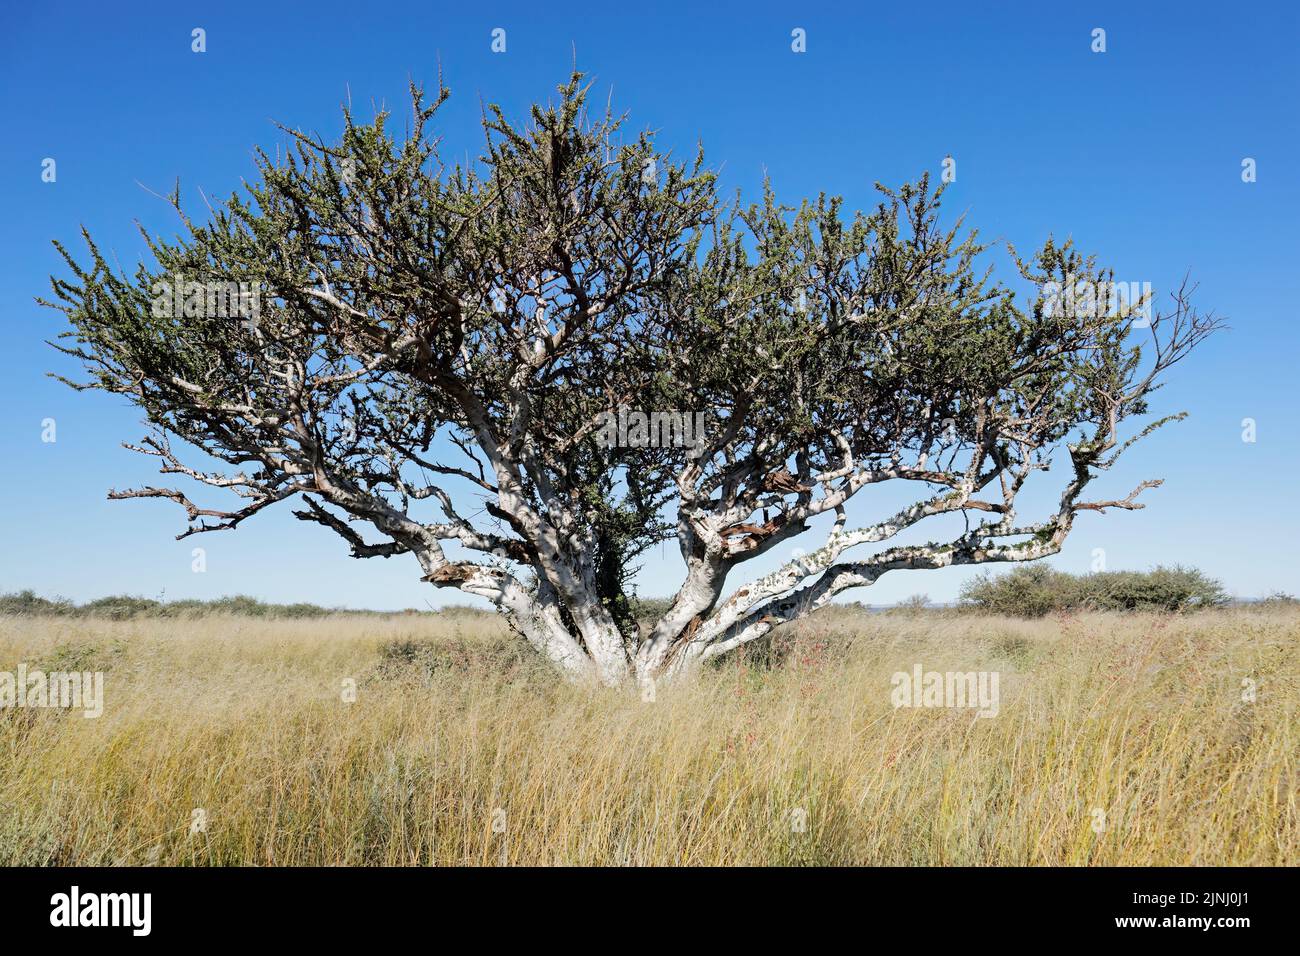 African shepherds tree (Boscia albitrunca) in grassland against a blue sky, South Africa Stock Photo